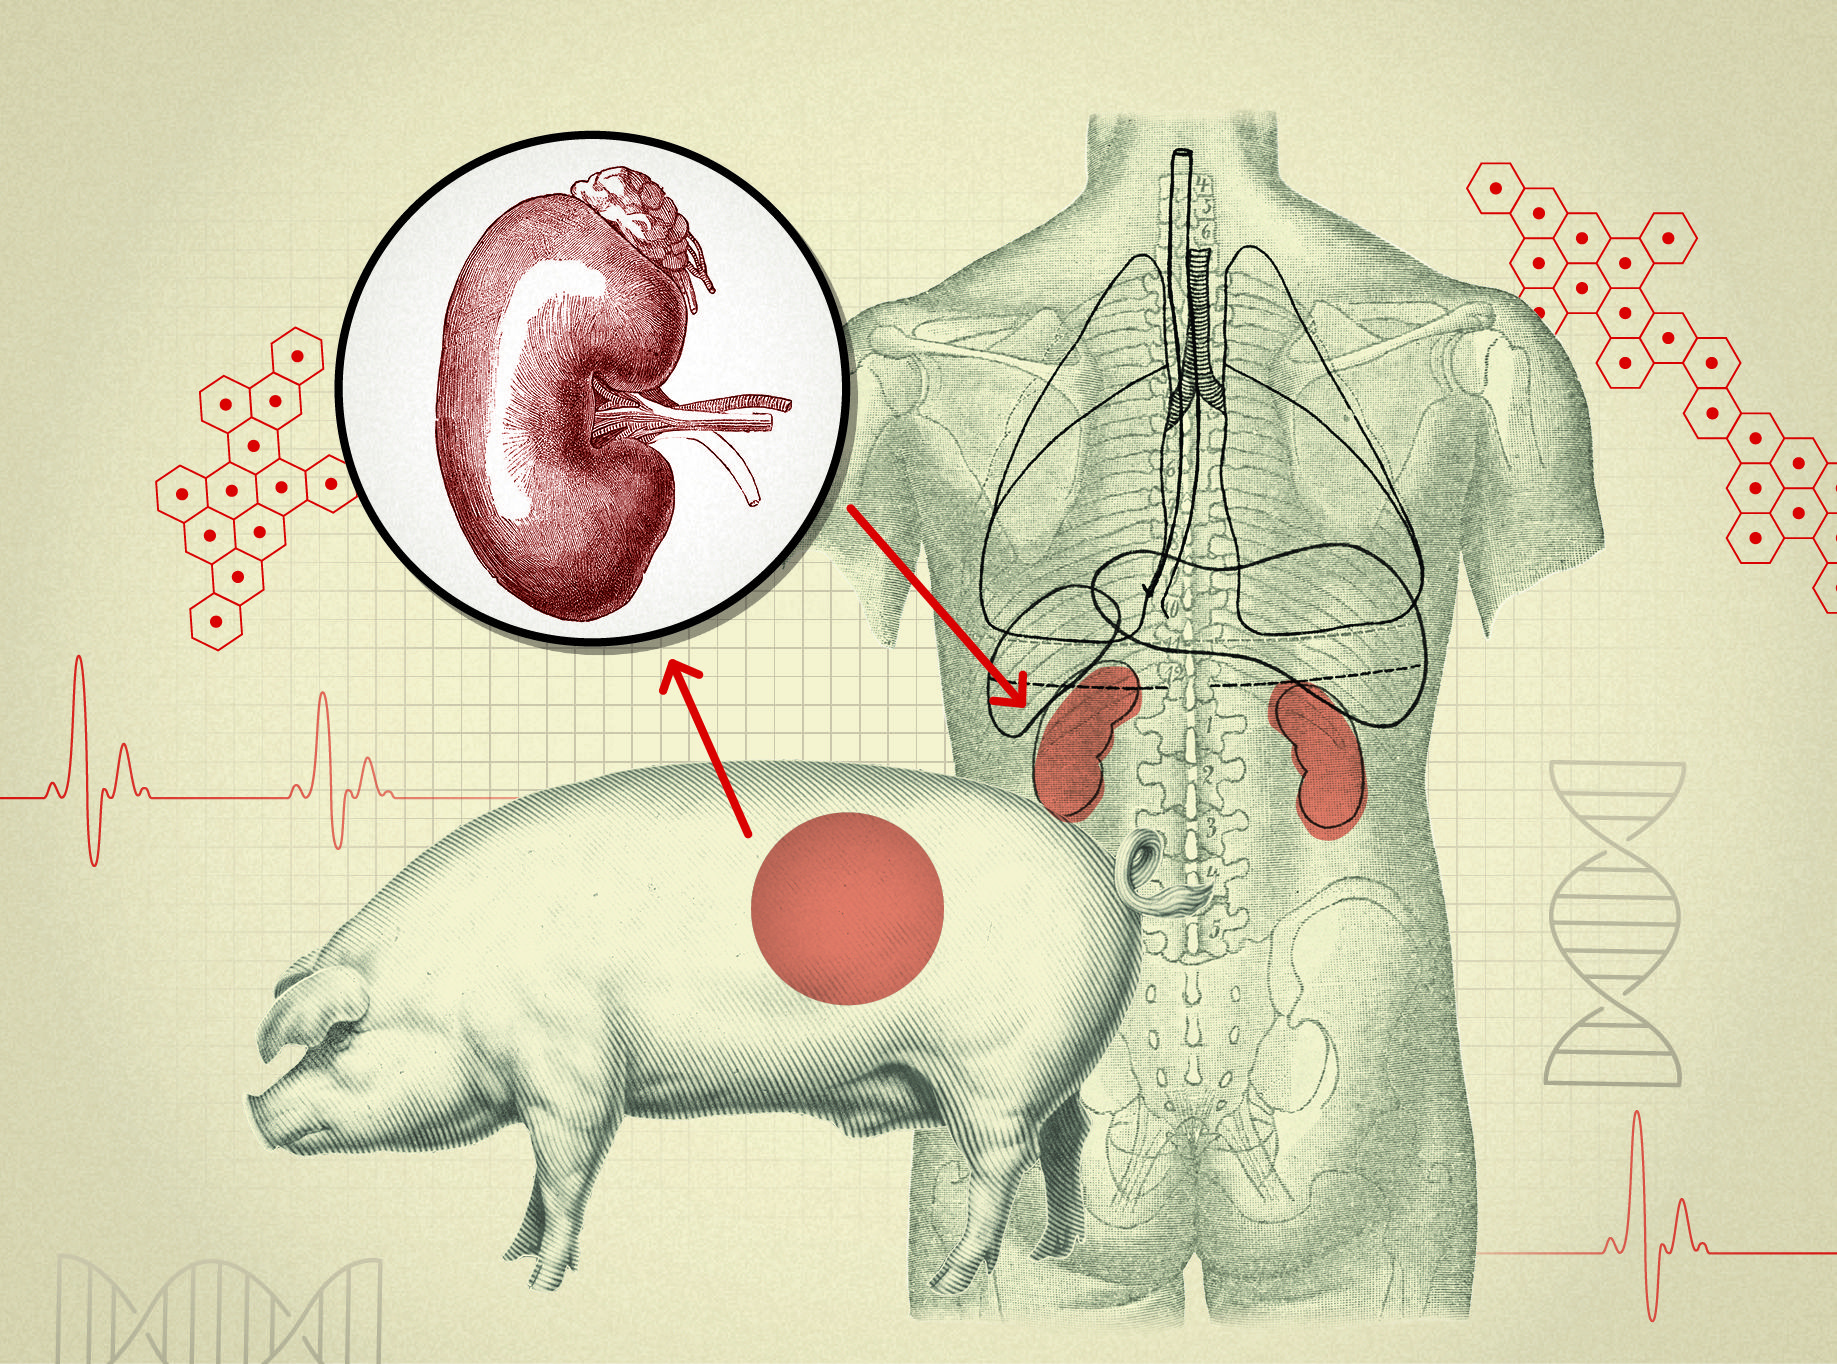 Pig to Human Organ Transplant | Can a Pig Heart Transplant to Humans?